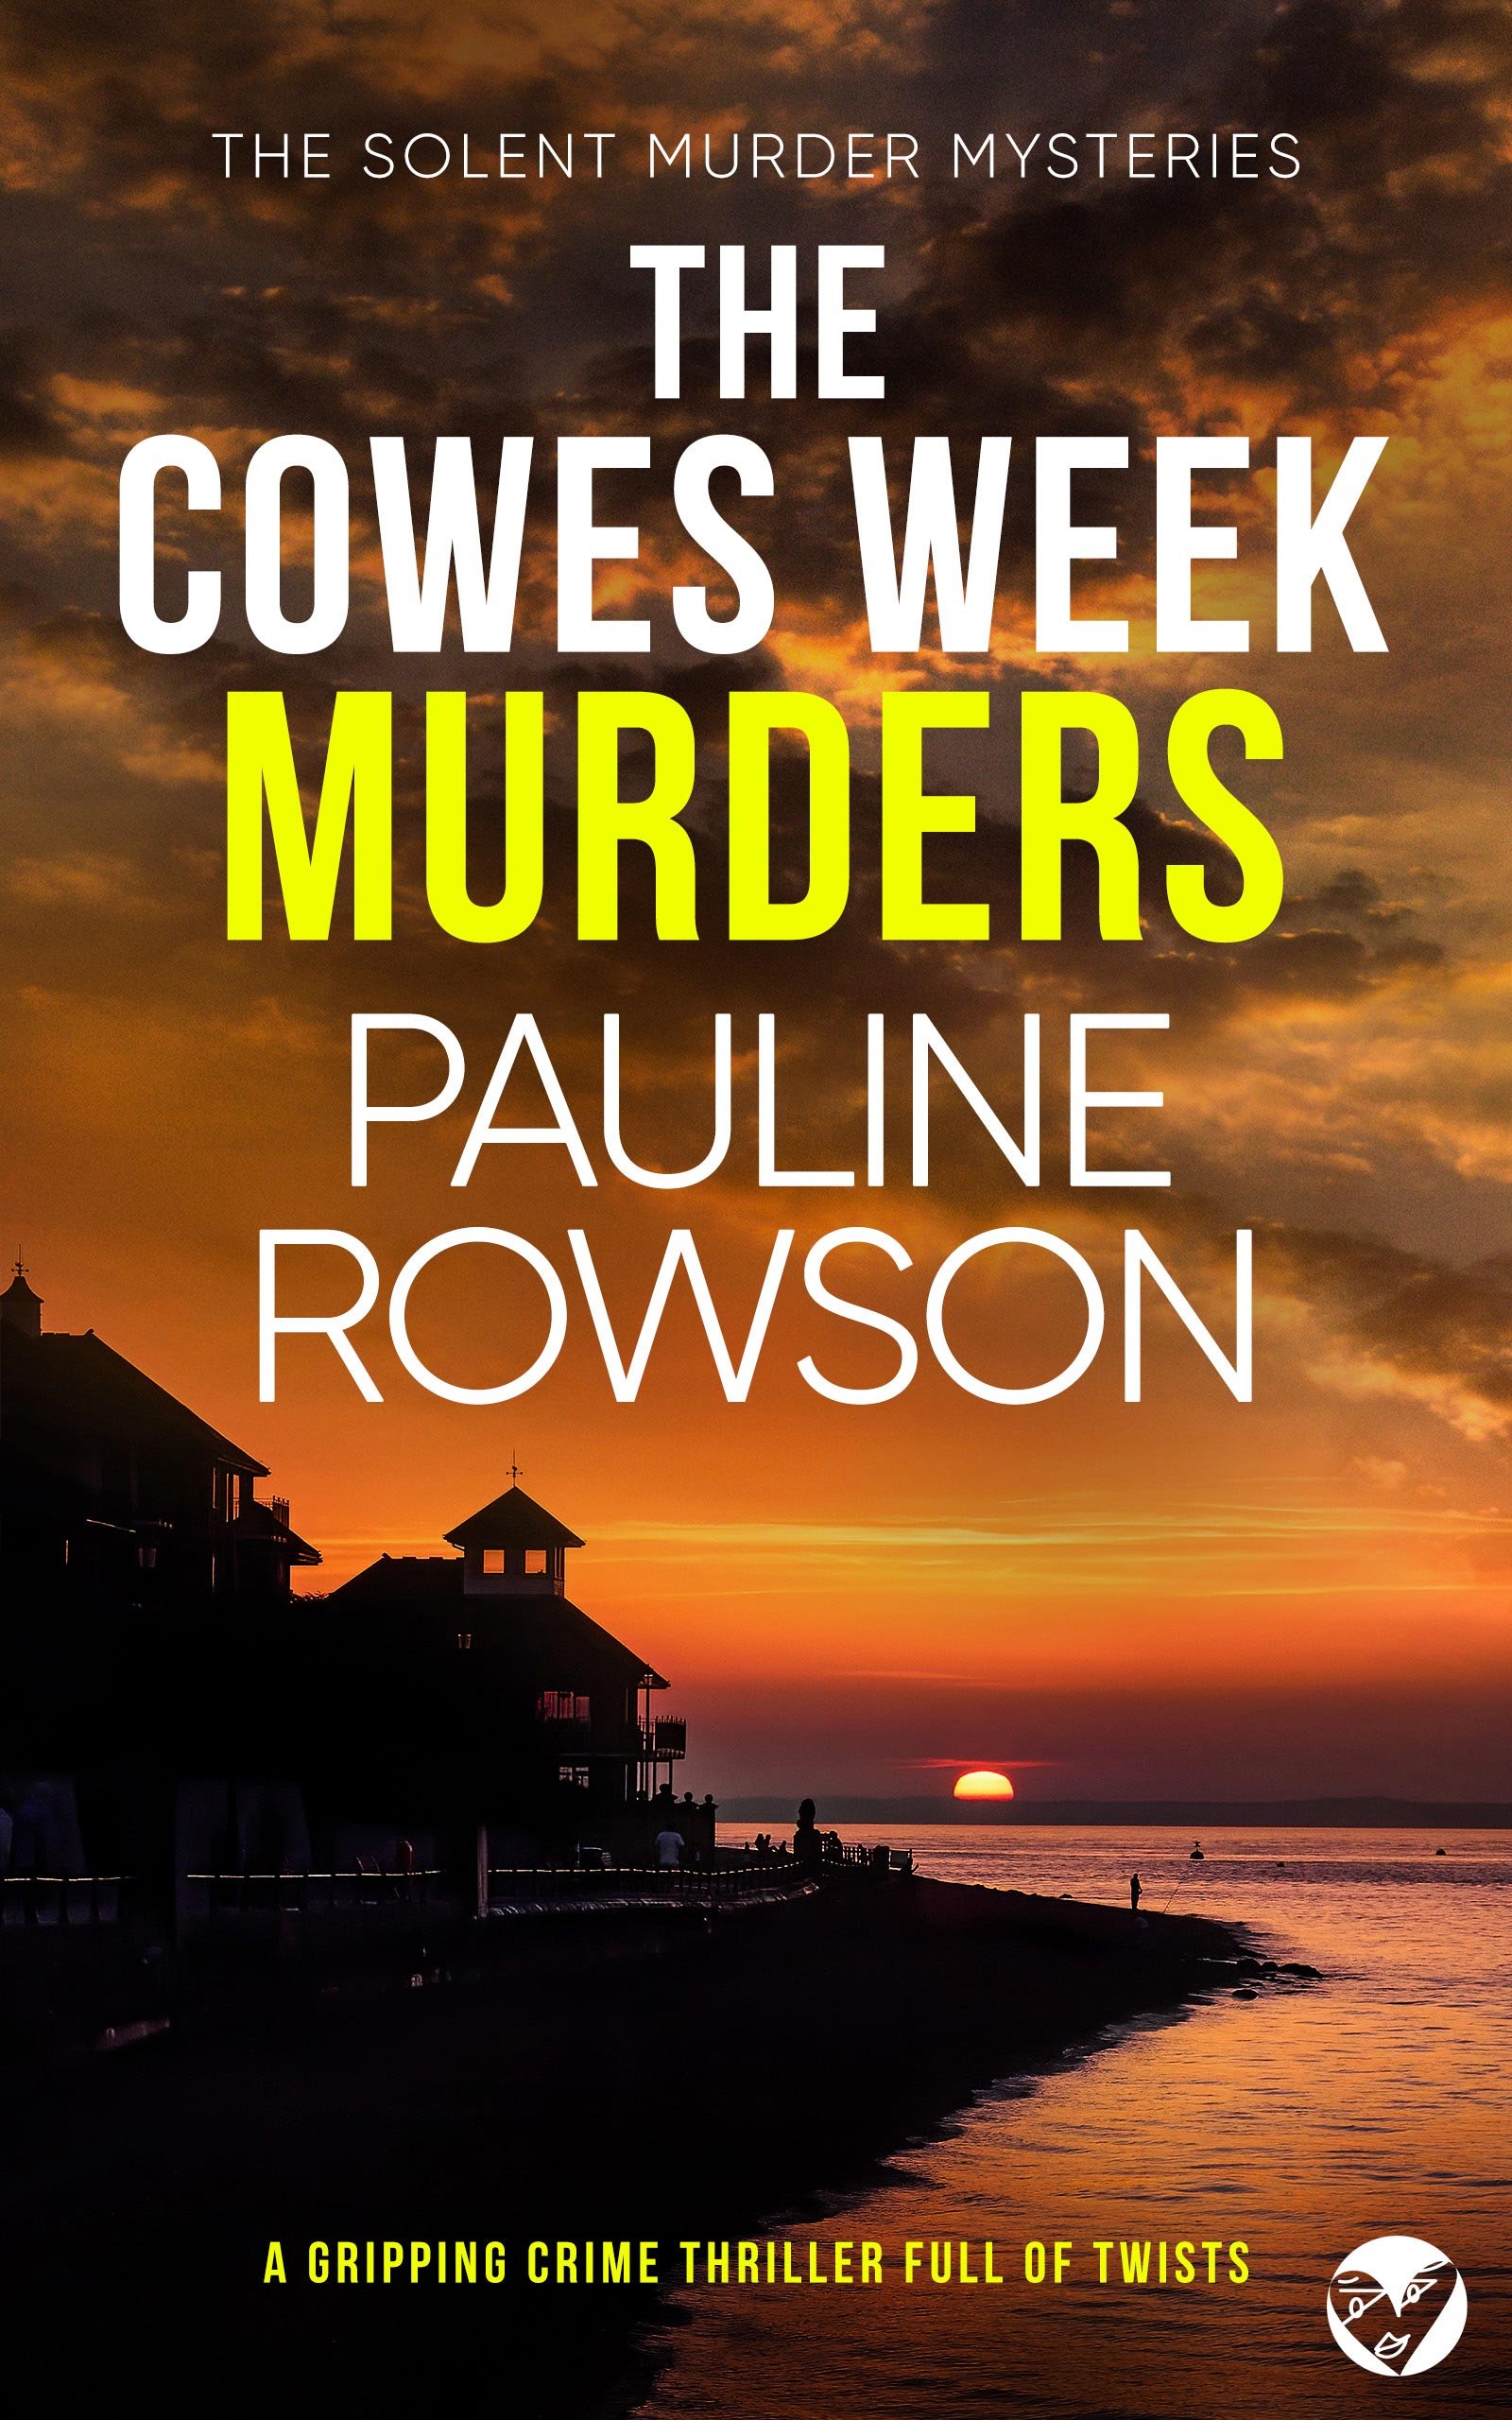 THE COWES WEEK MURDERS Cover publish 546KB.jpg